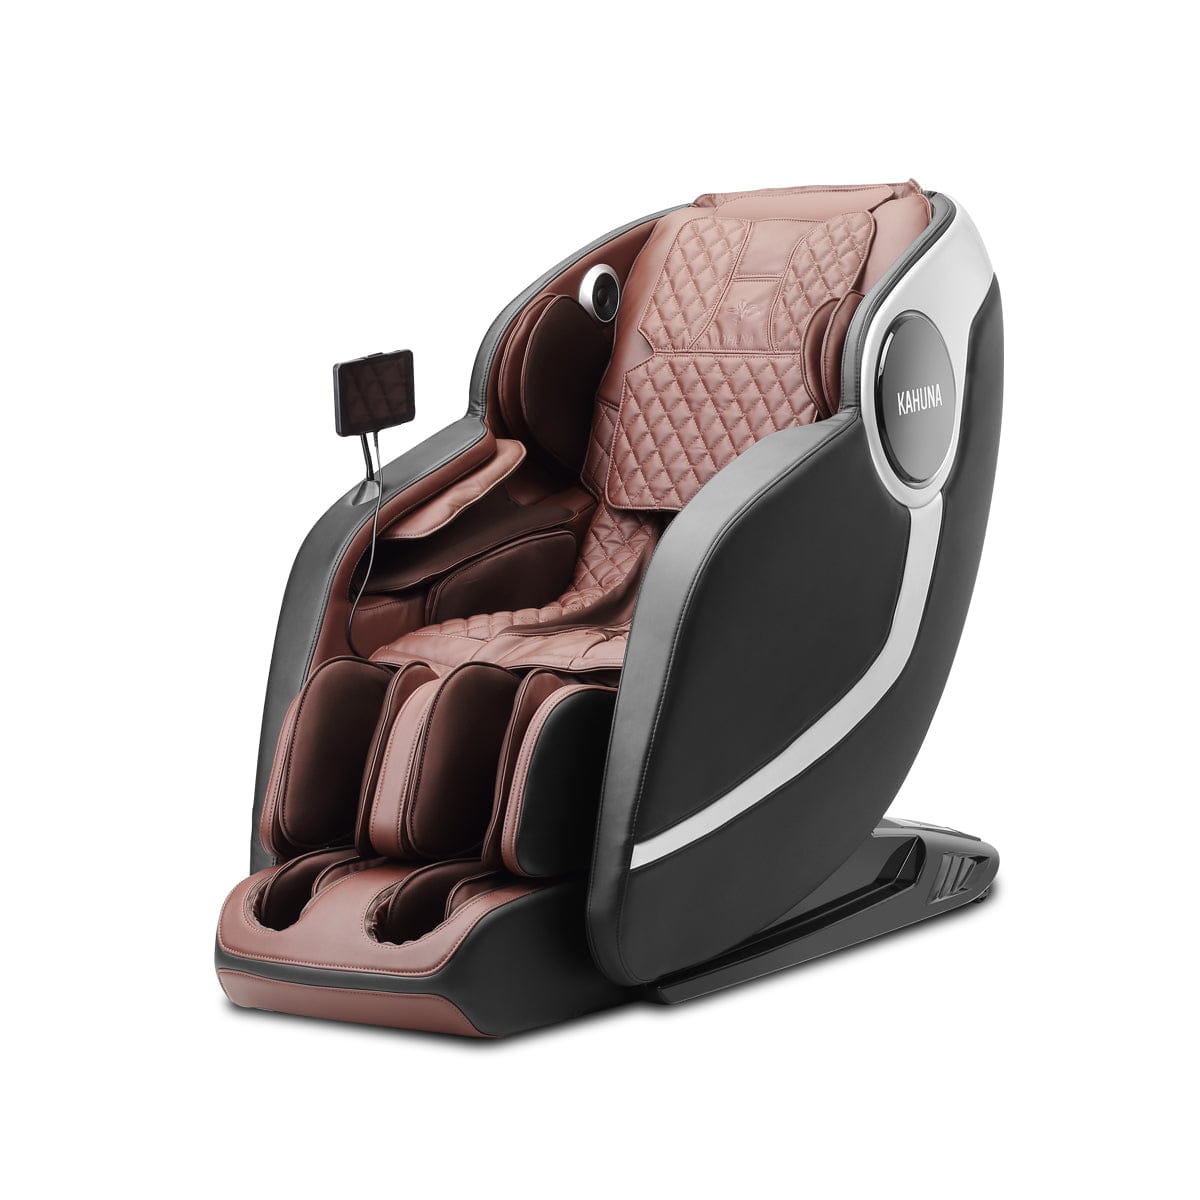 Kahuna Chair – EM Arete [Brown/Black] - Massage Chair